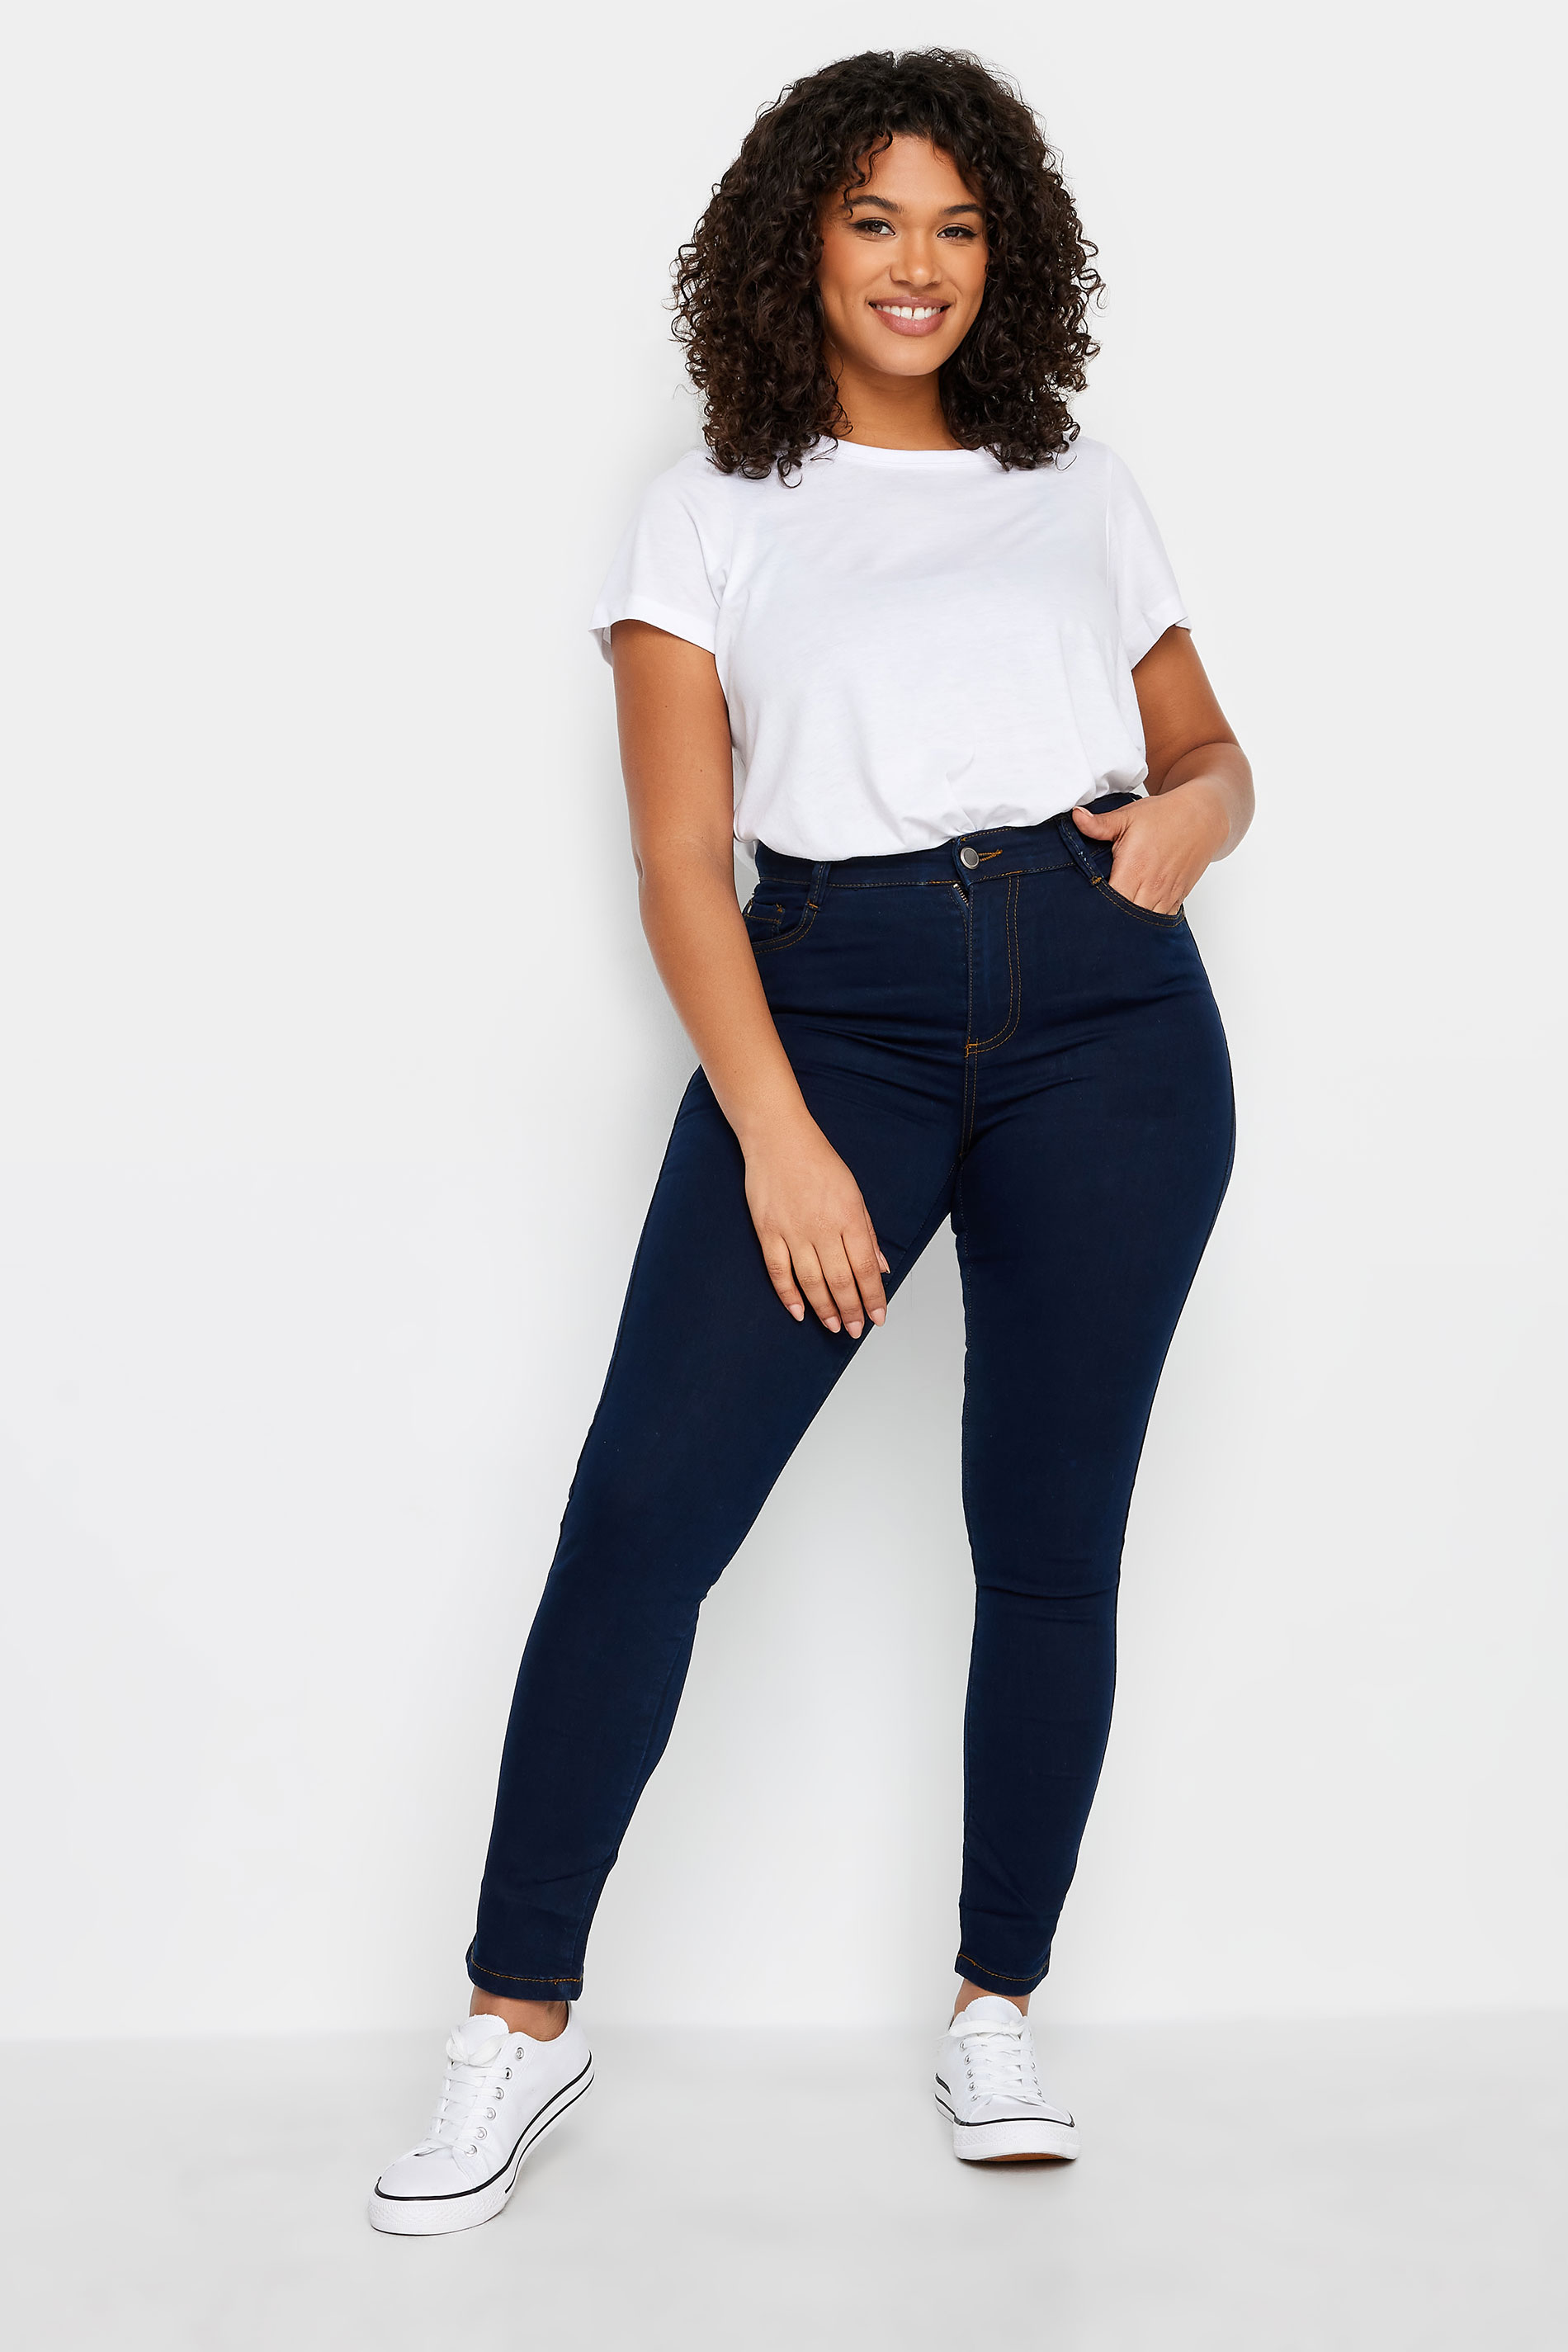 EVANS Plus Size Fit Blue Denim Skinny Jeans | Evans 2